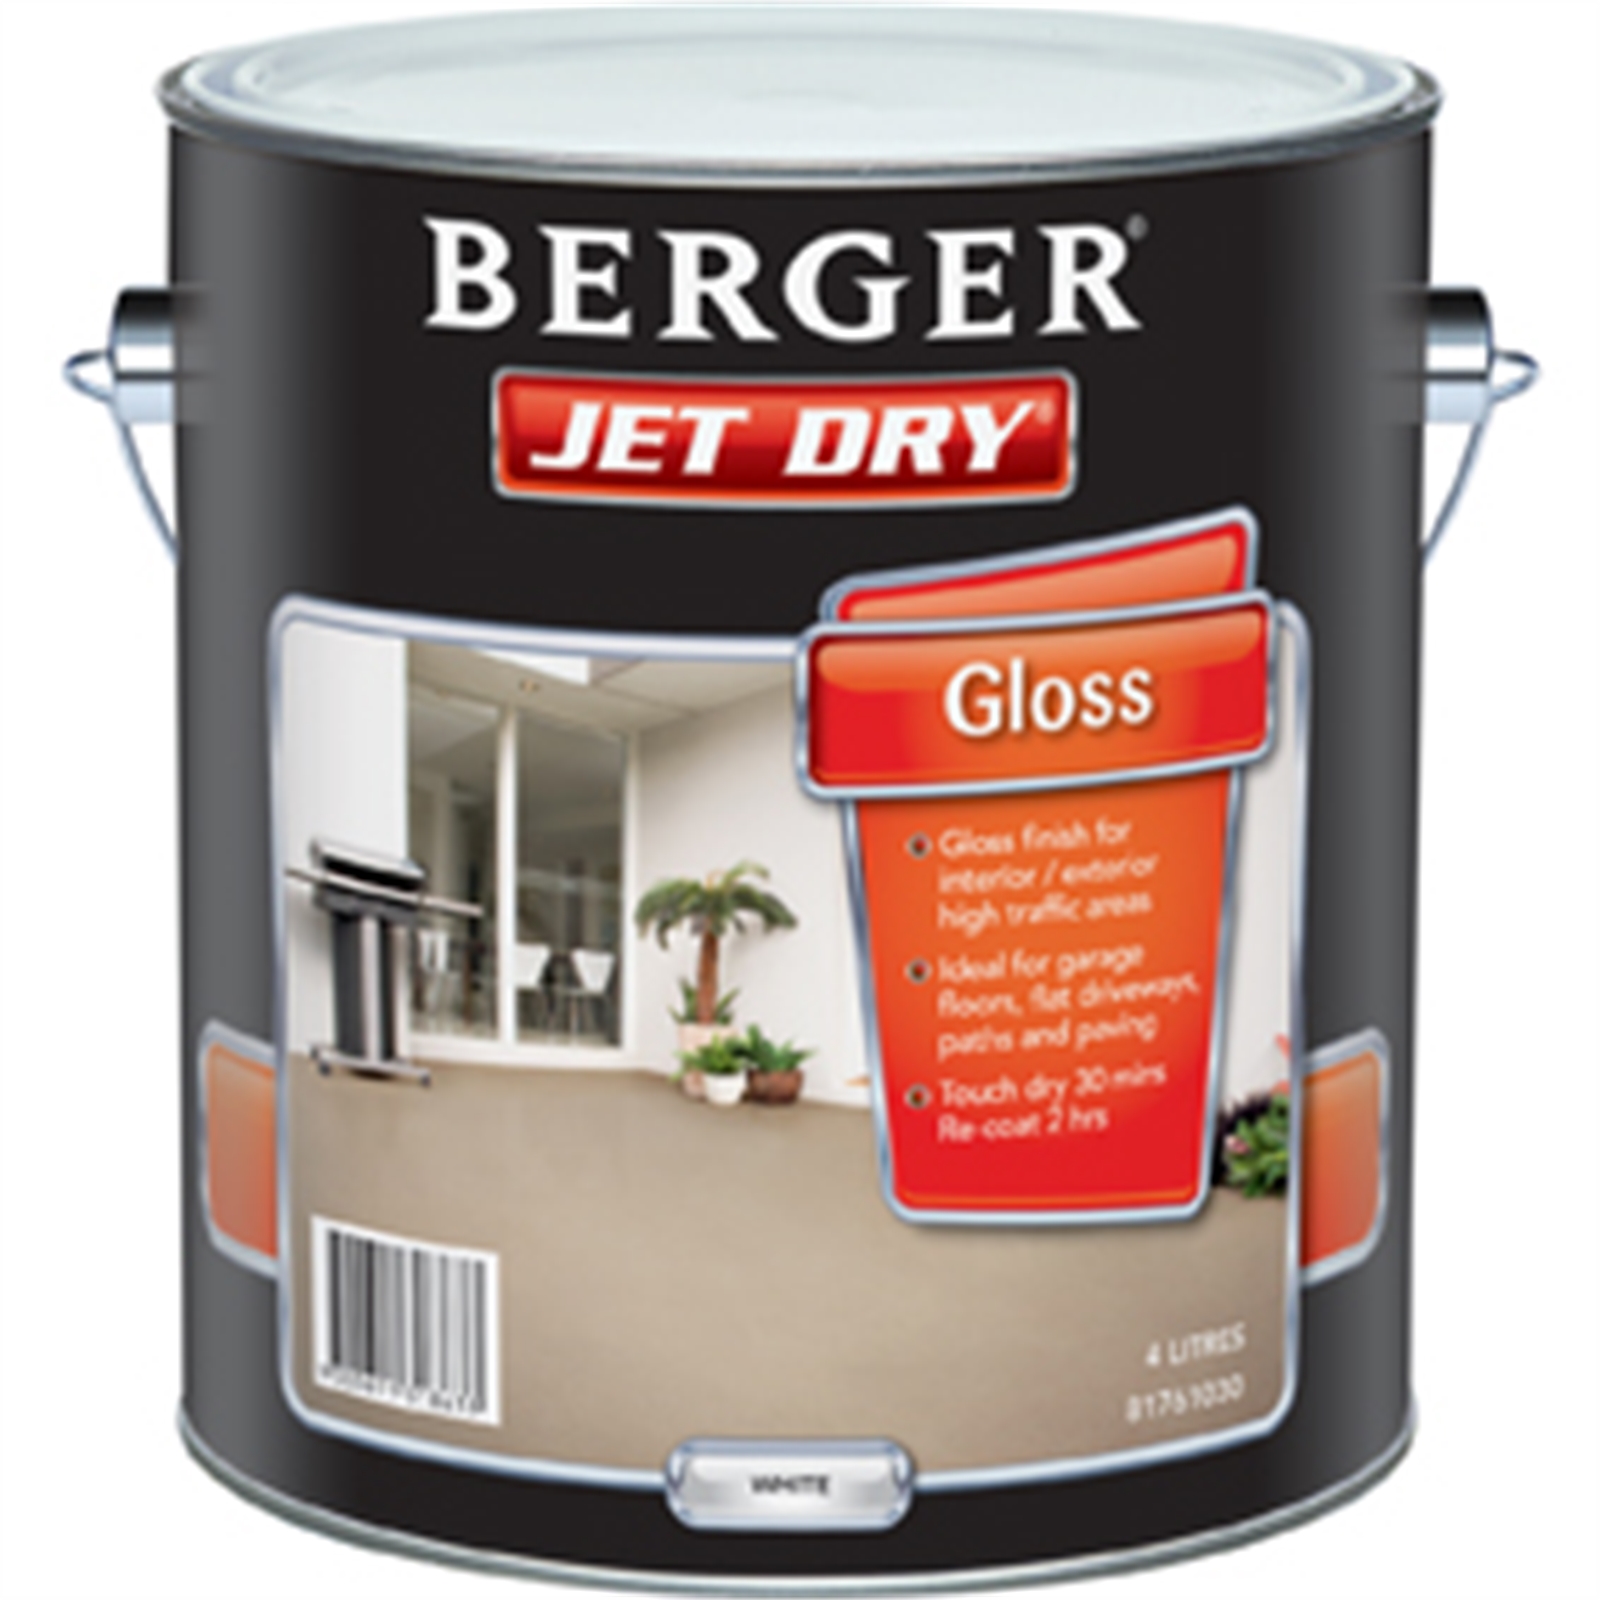 Berger Jet Dry 10L Gloss Amber Paving Paint